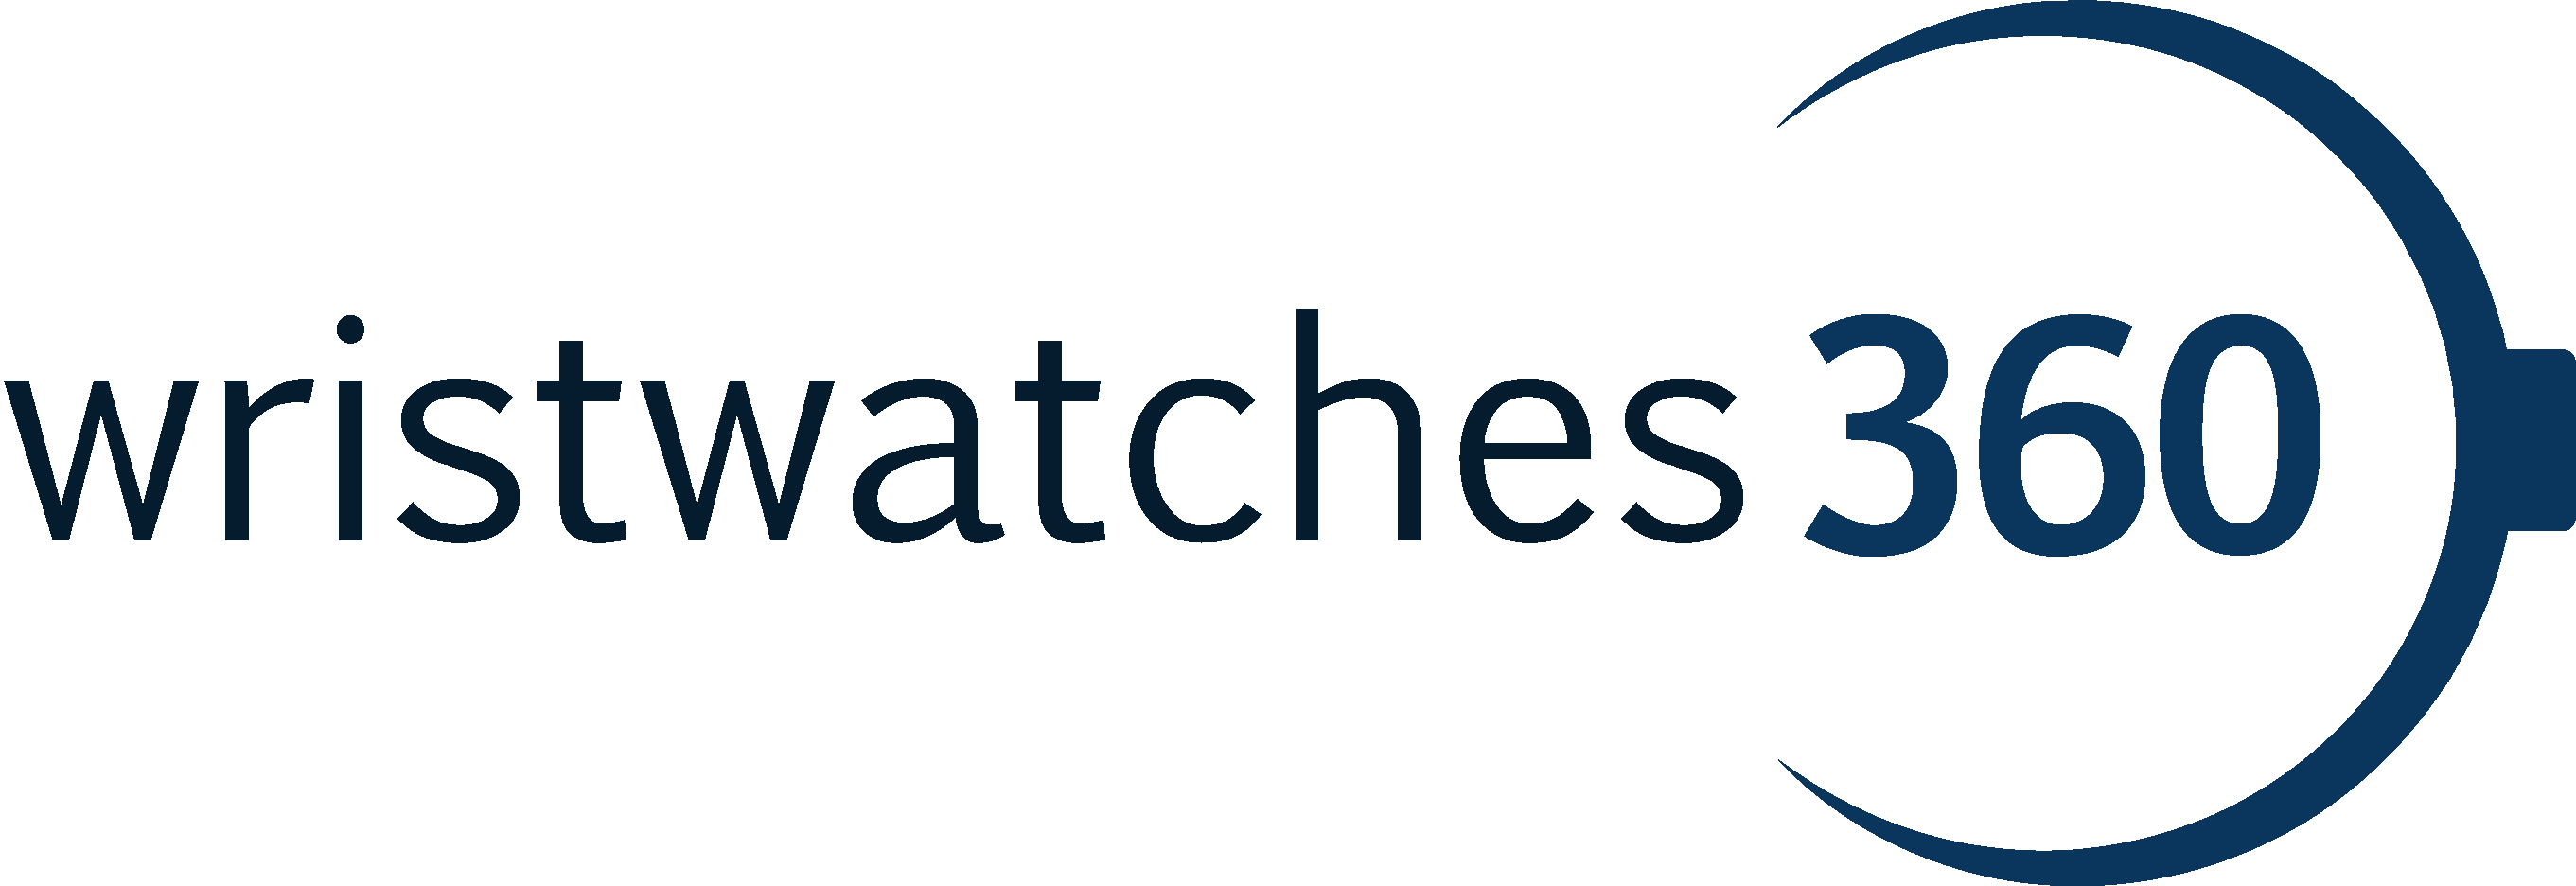 Wristwatches360 Logo